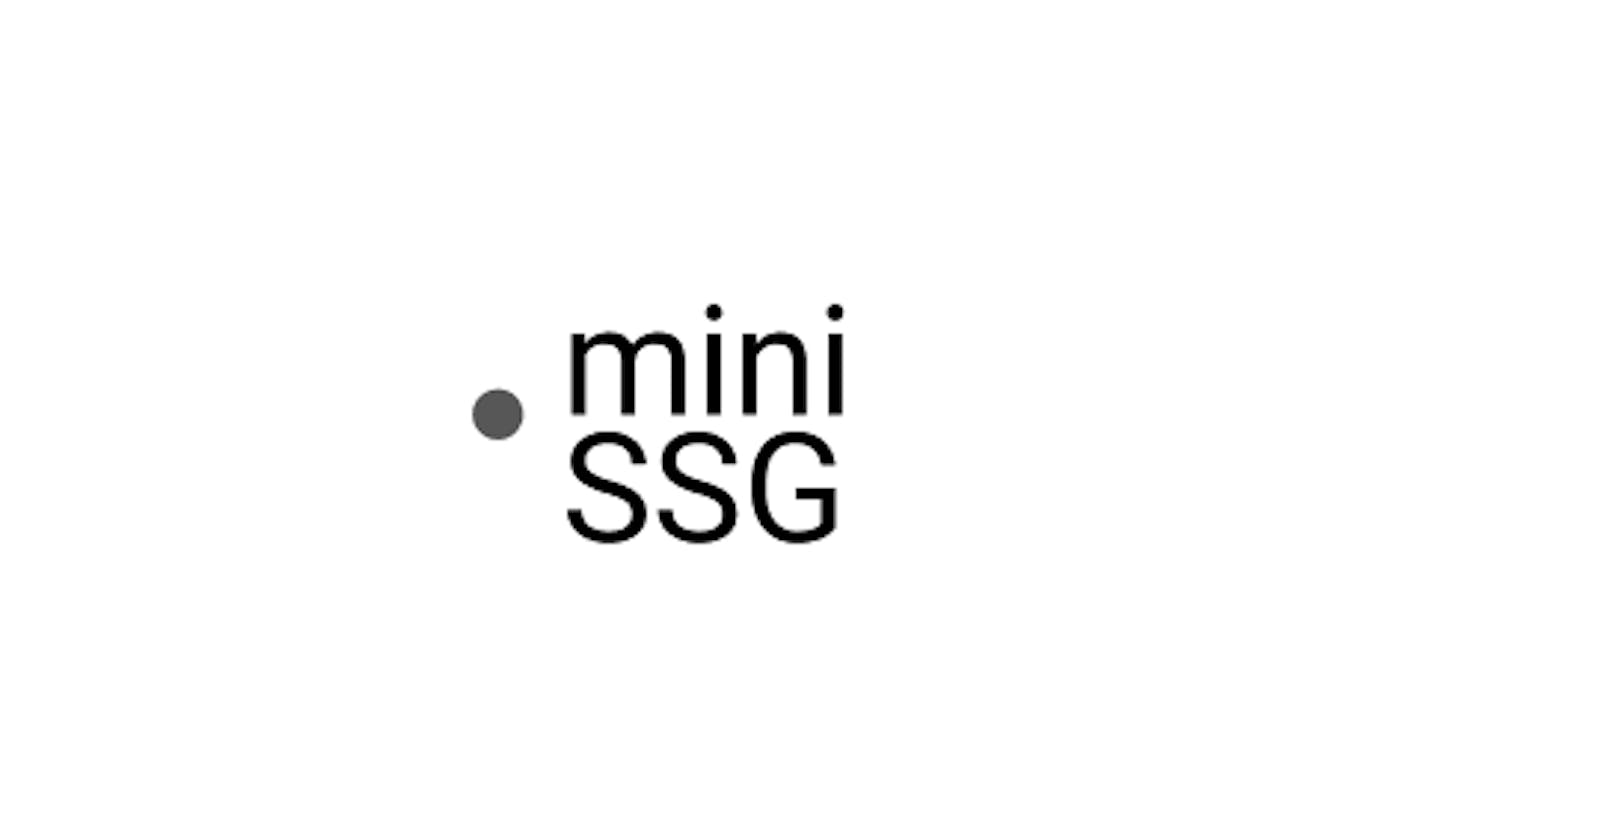 Write HTML dynamically with mini SSG